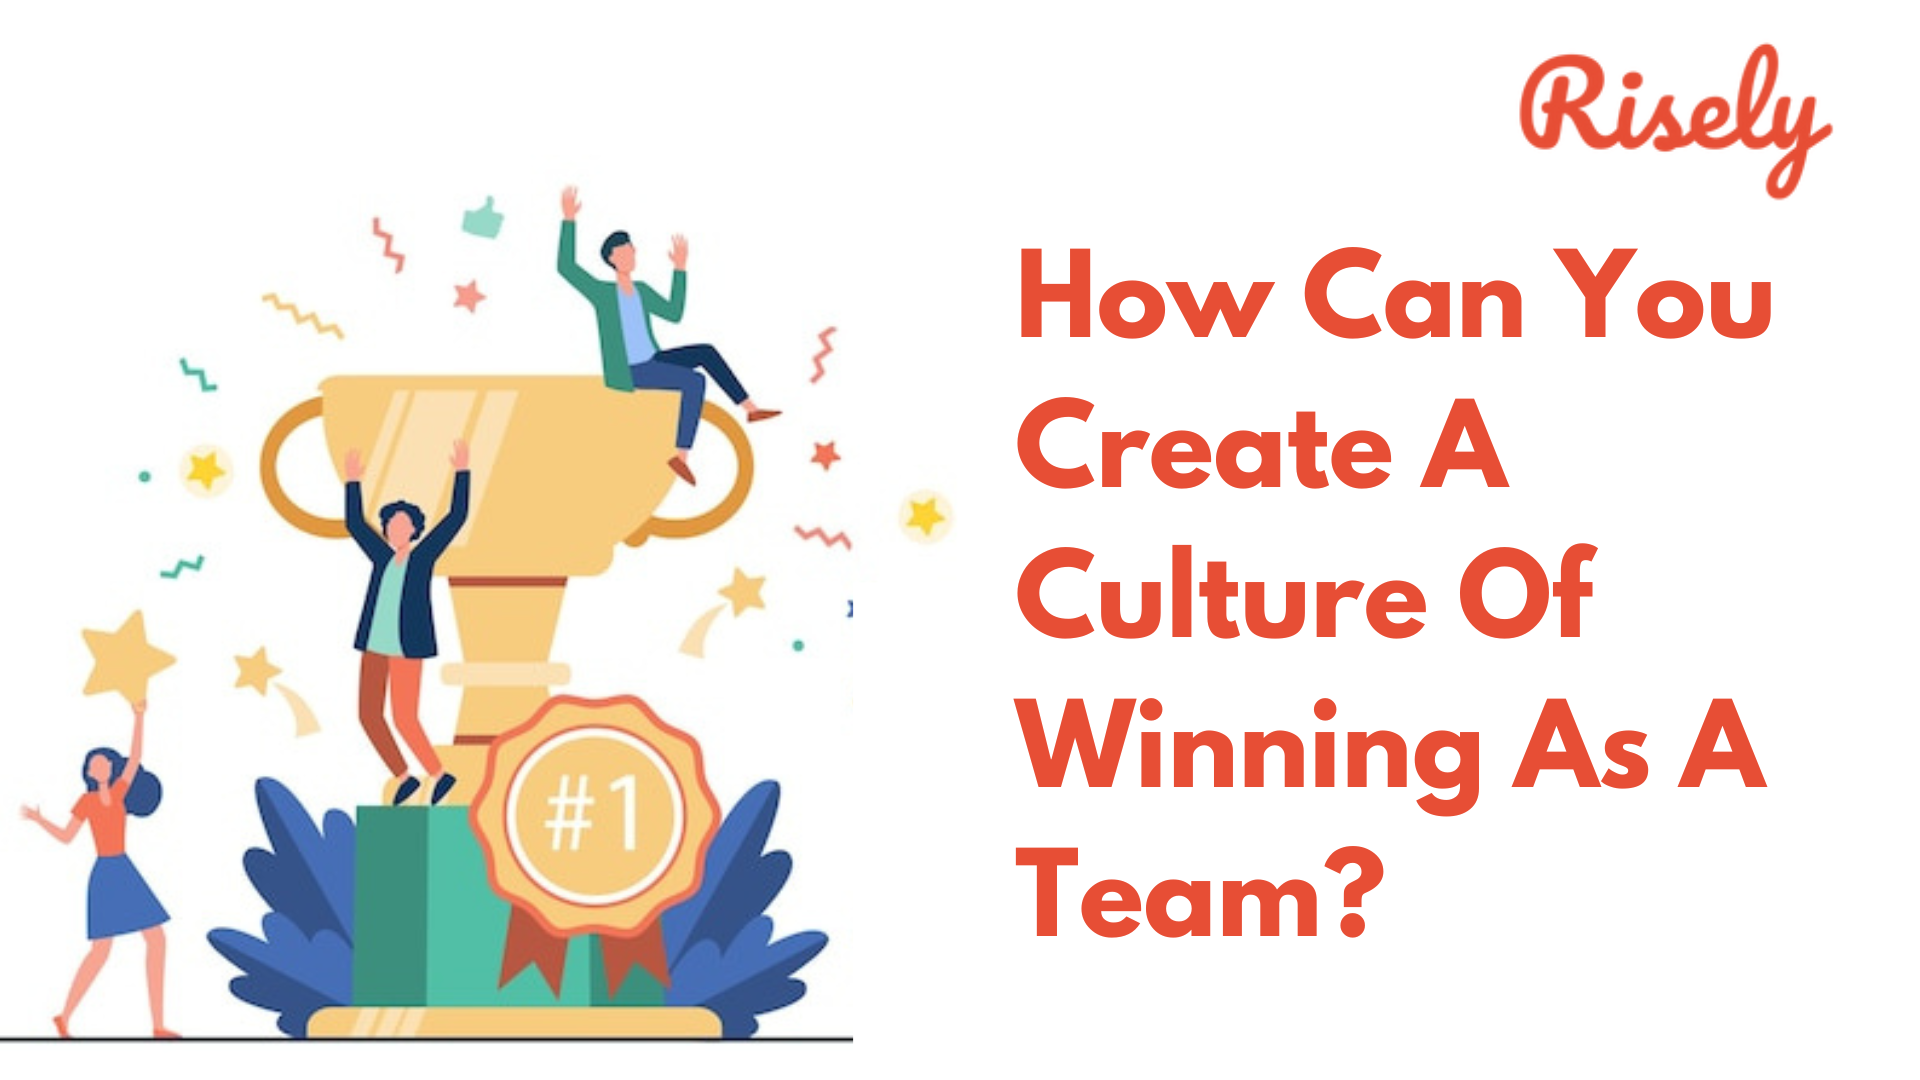 a culture of winning